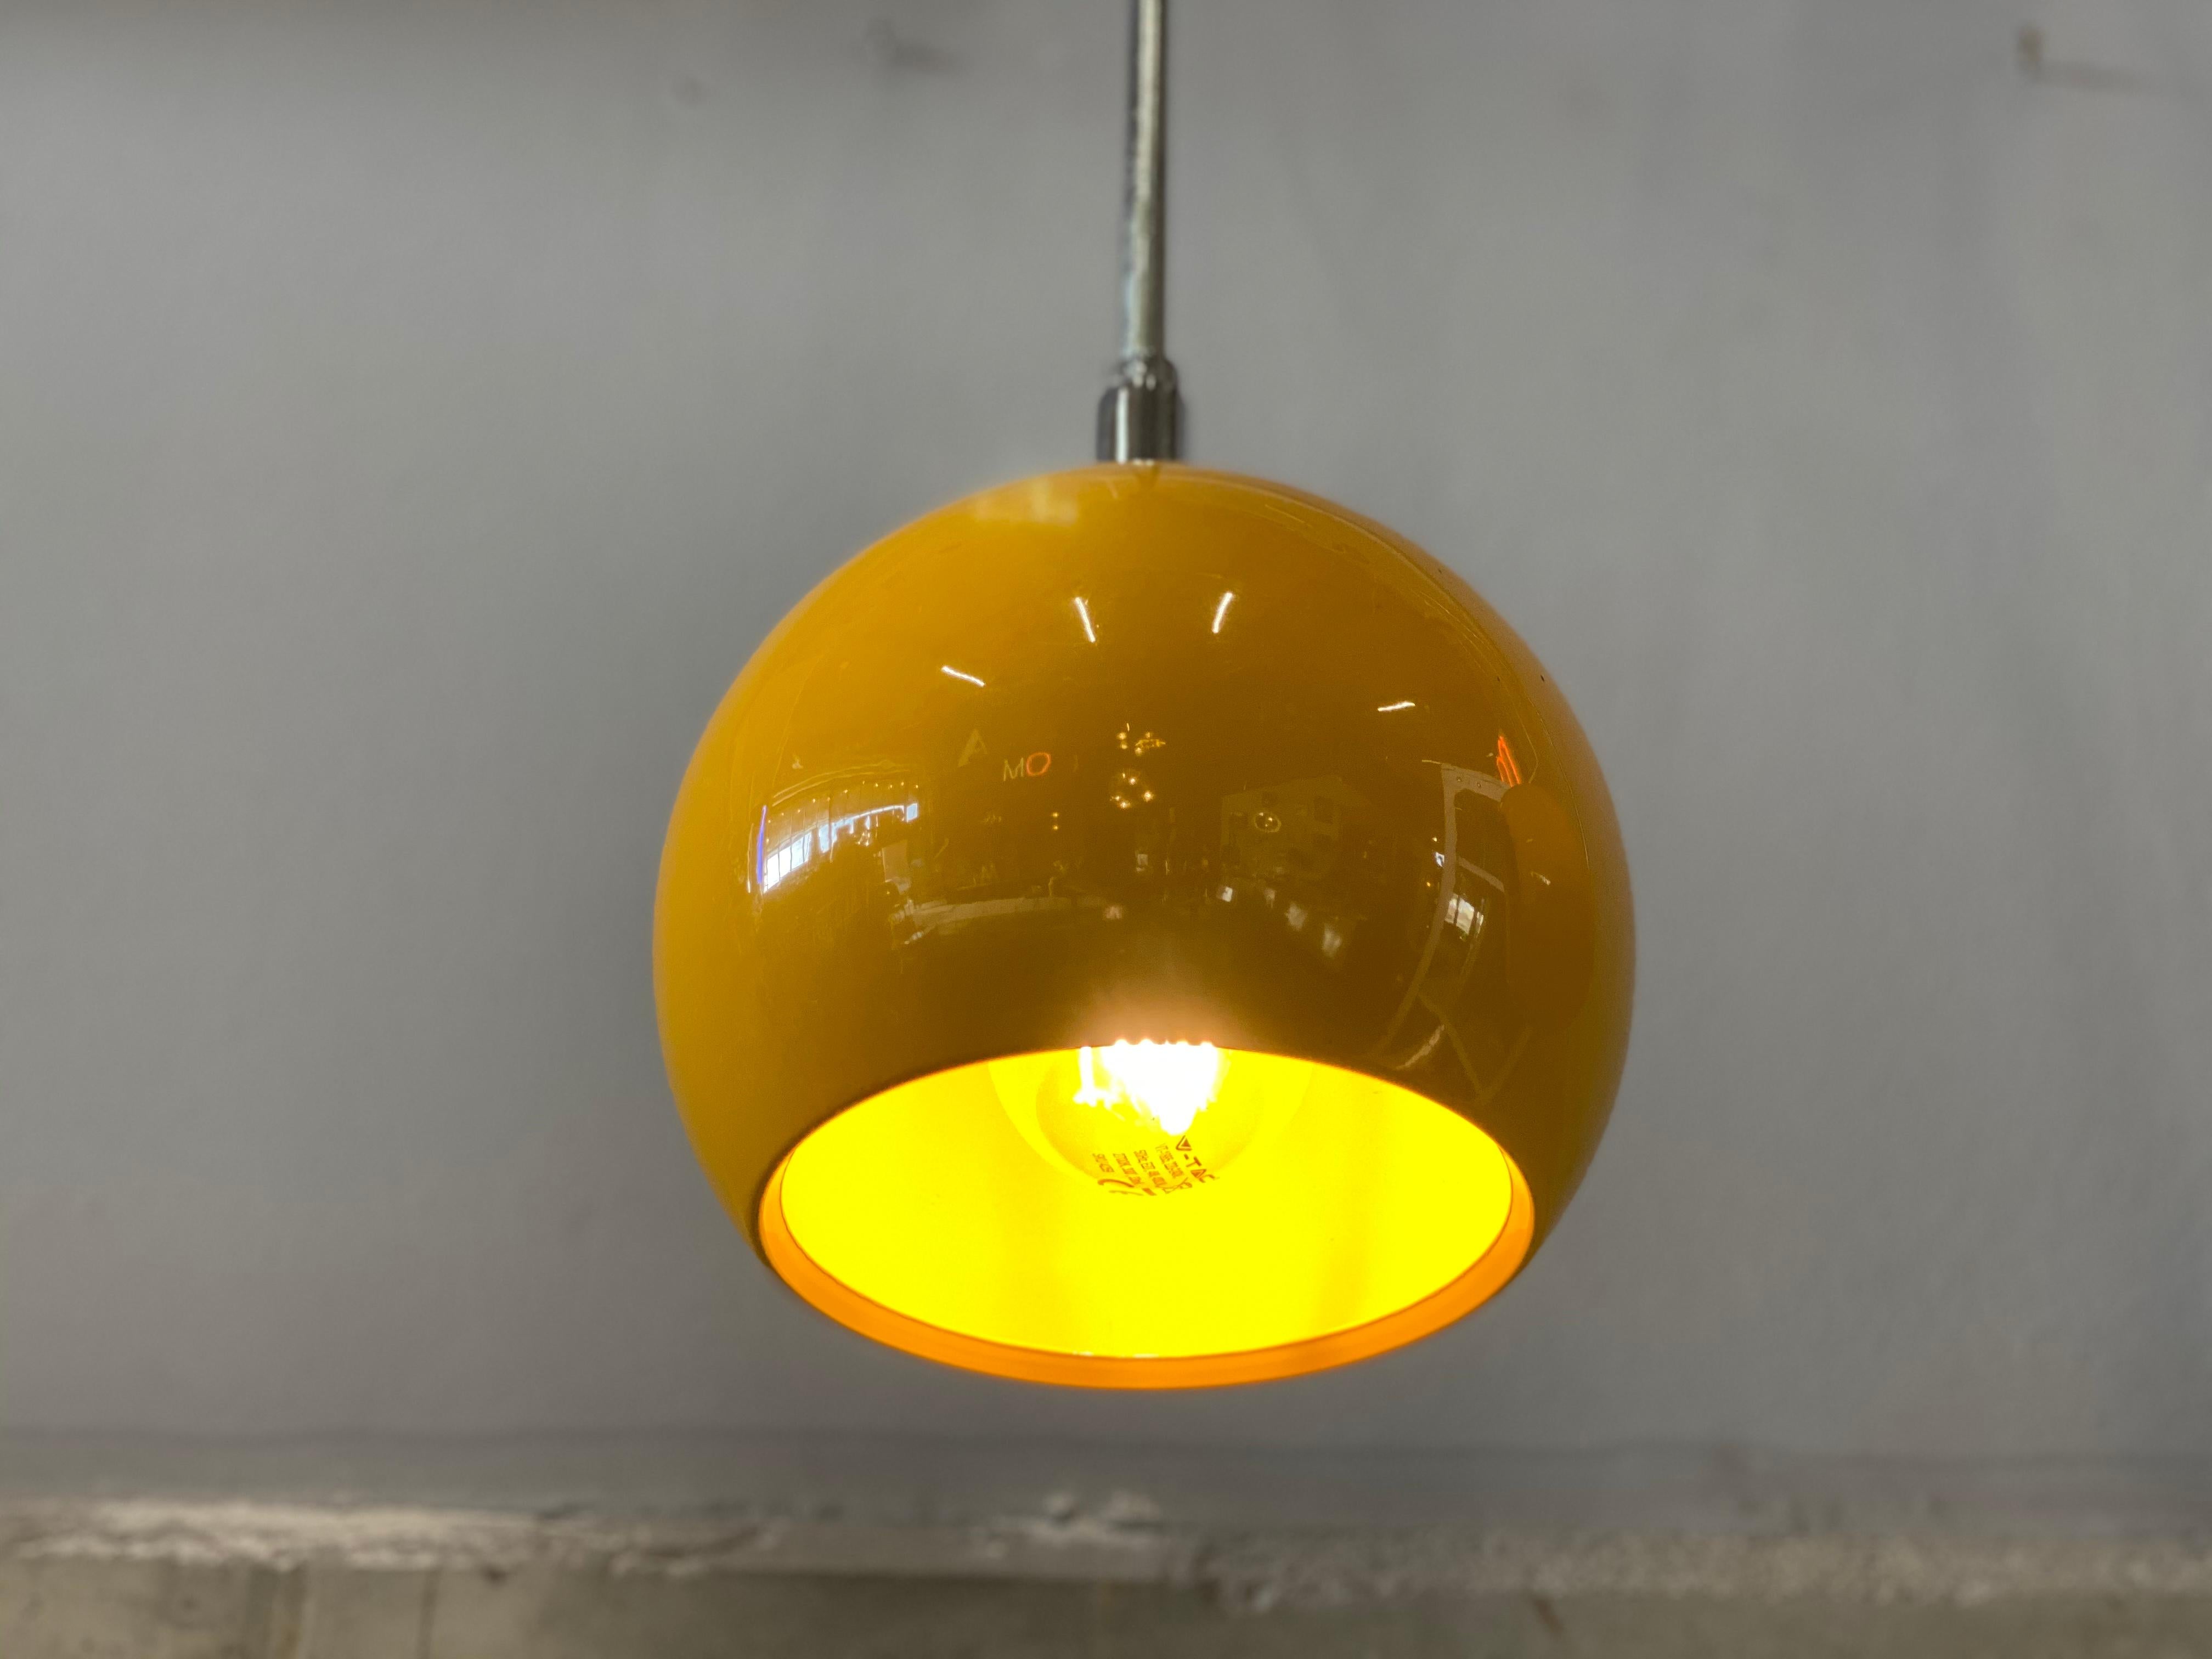 Set of Yellow Pendant Lamps / Spots, Space Age, 1970s Design, Panton Style 7